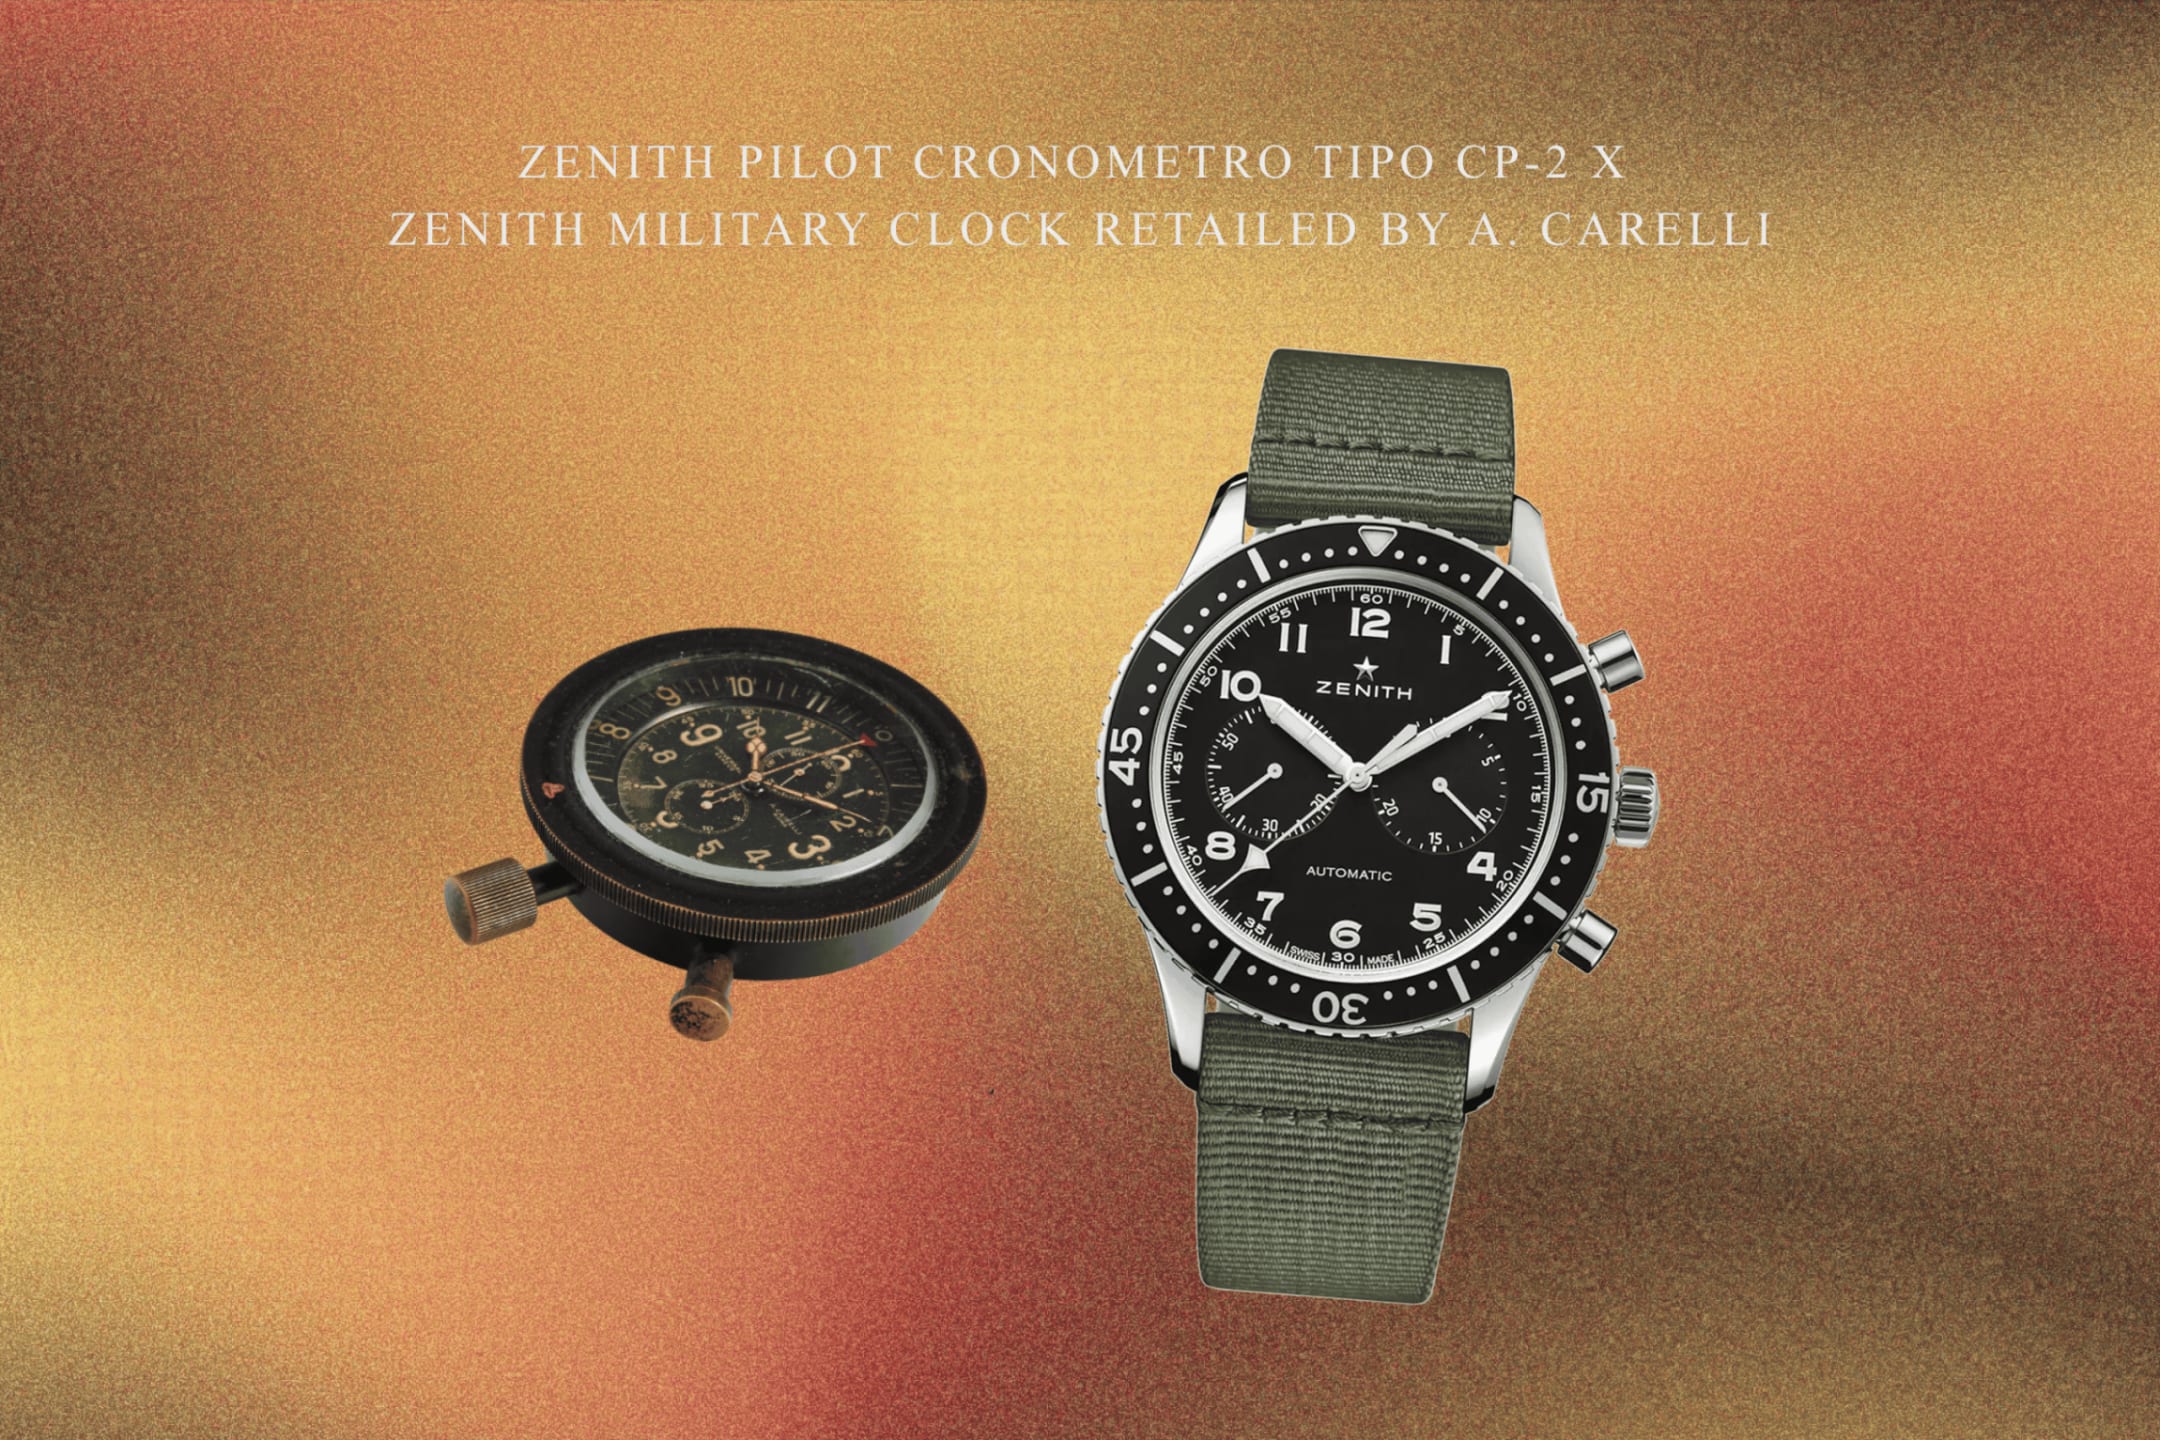 Zenith Pilot Cronometro TIPO CP-2 x Zenith military clock retailed by A. Carelli